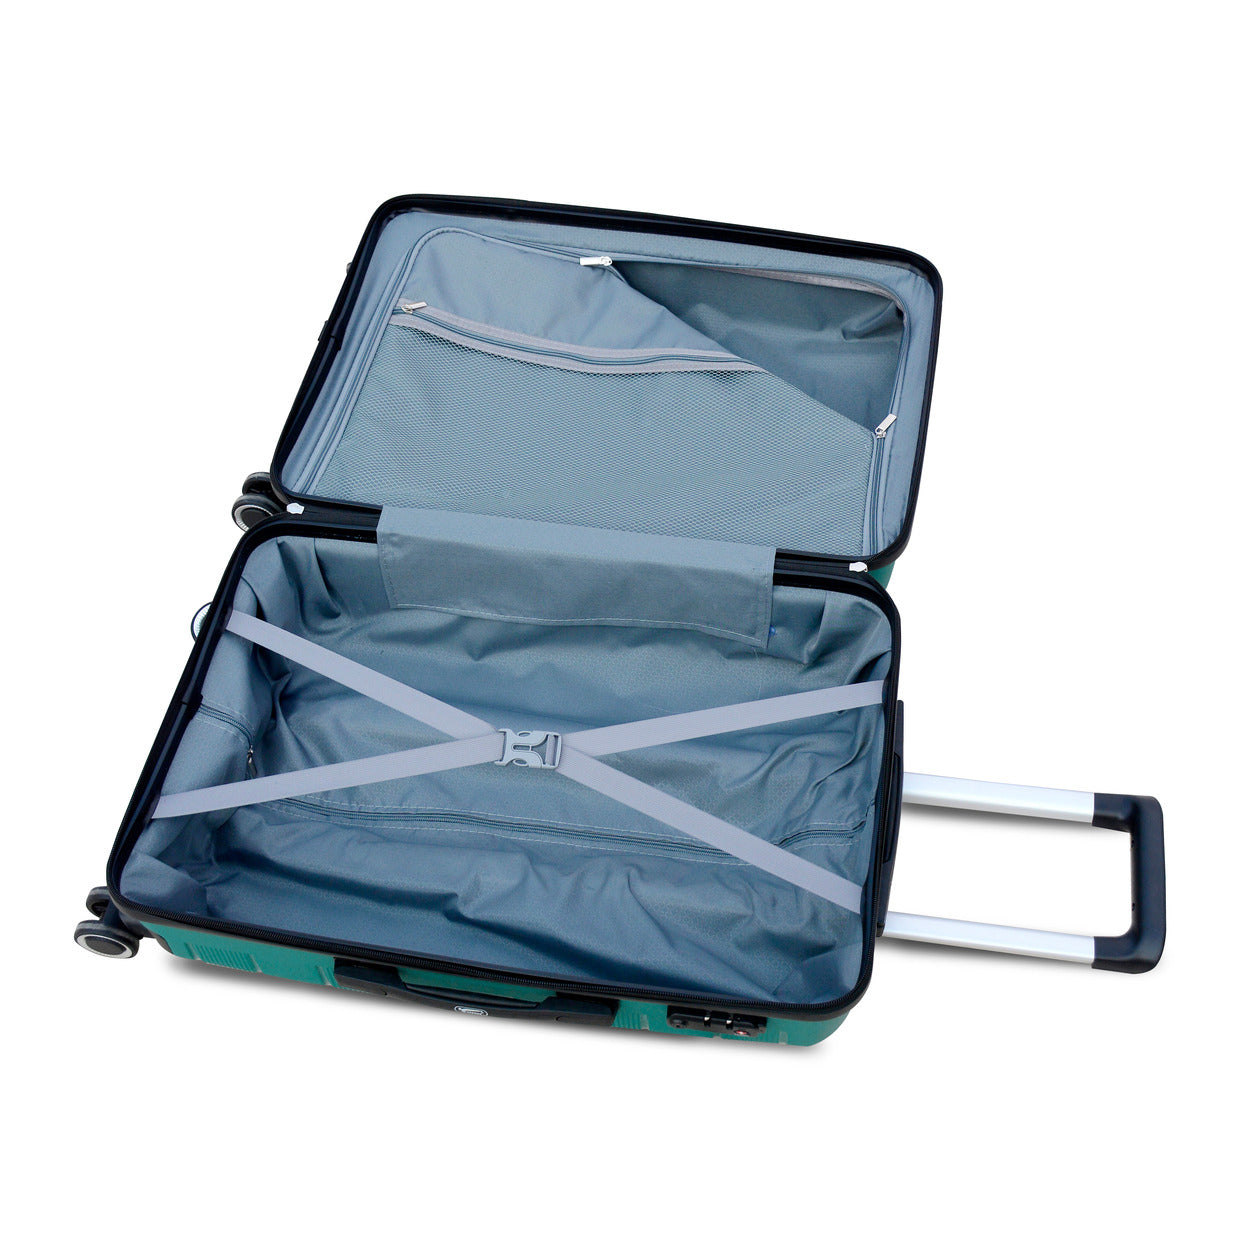 20” Paris Fashion Lightweight PP Luggage Light Green Colour | Hard case Spinner Wheel Trolley Bag